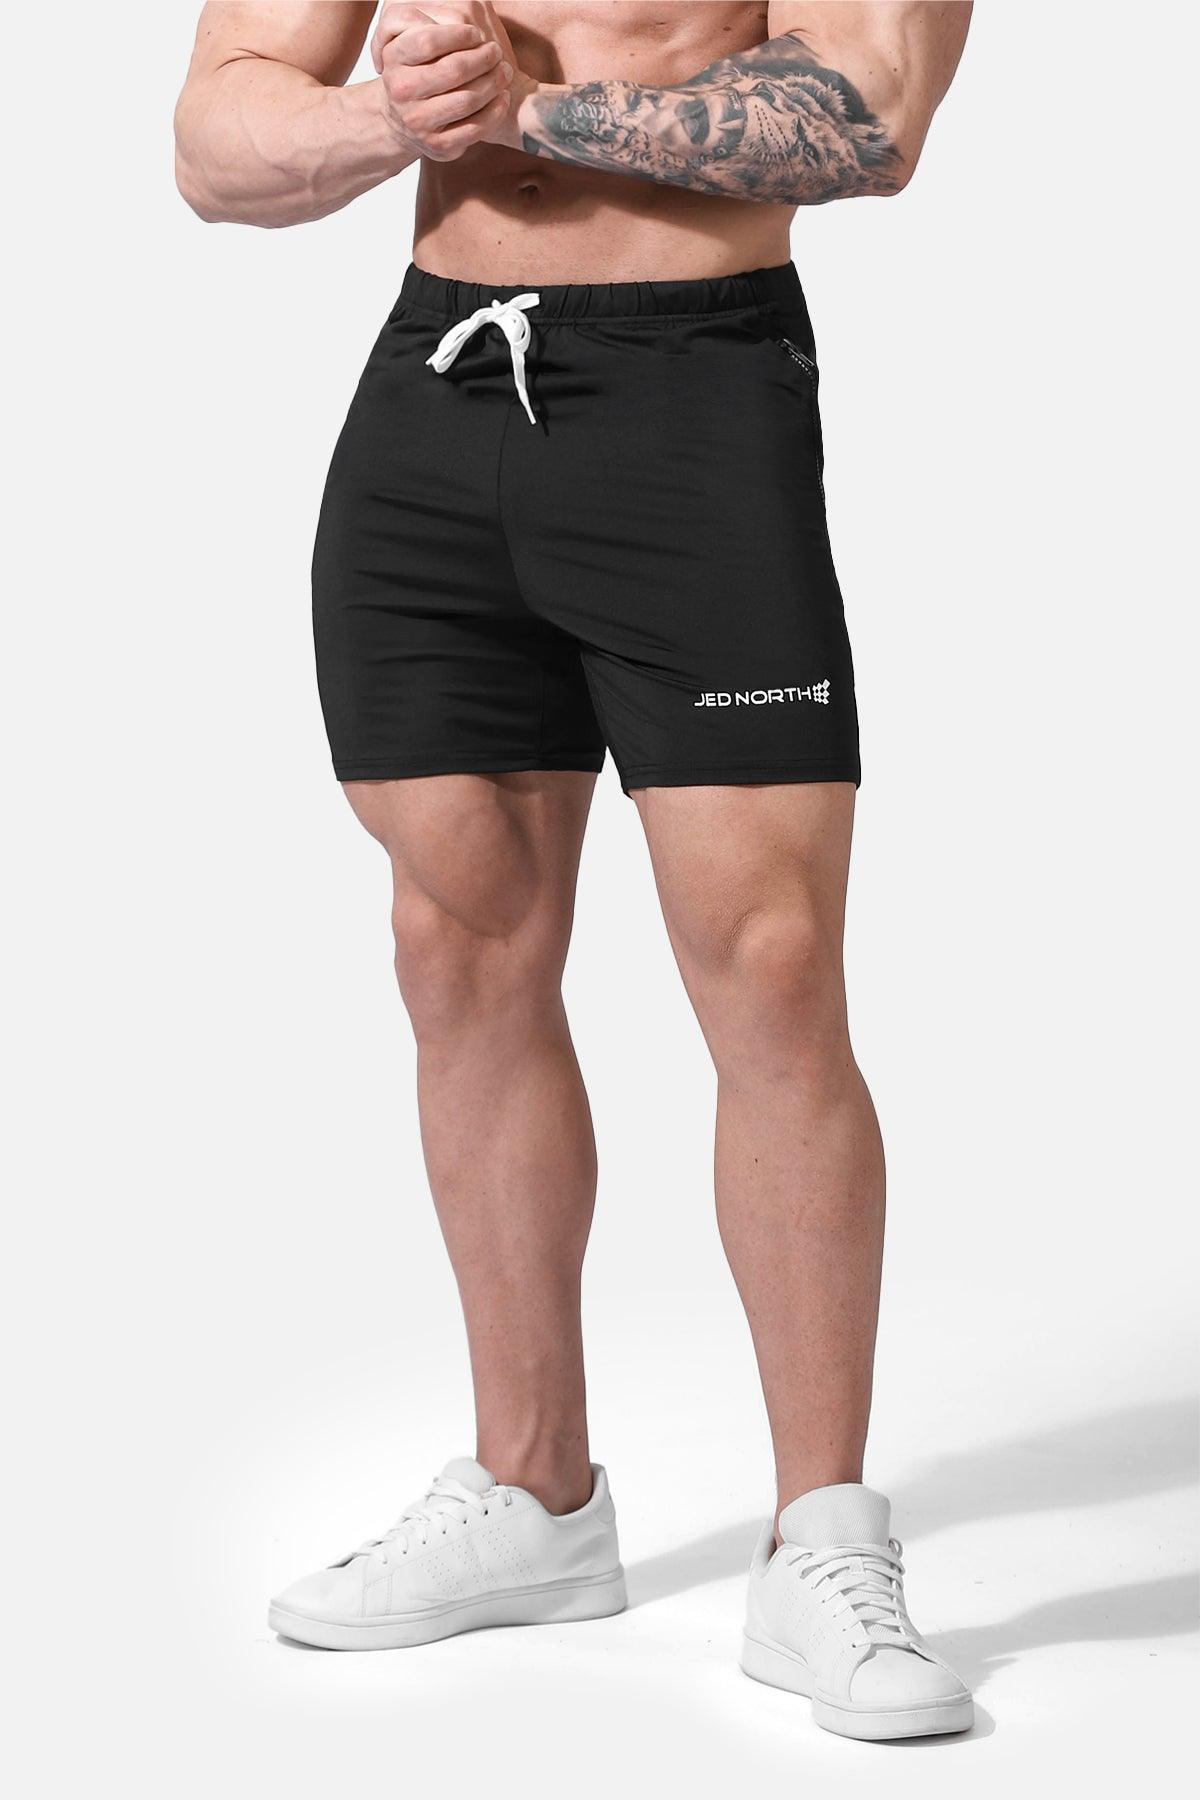 Agile Plus 5.5'' Bodybuilding Shorts w Zipper Pockets - Black